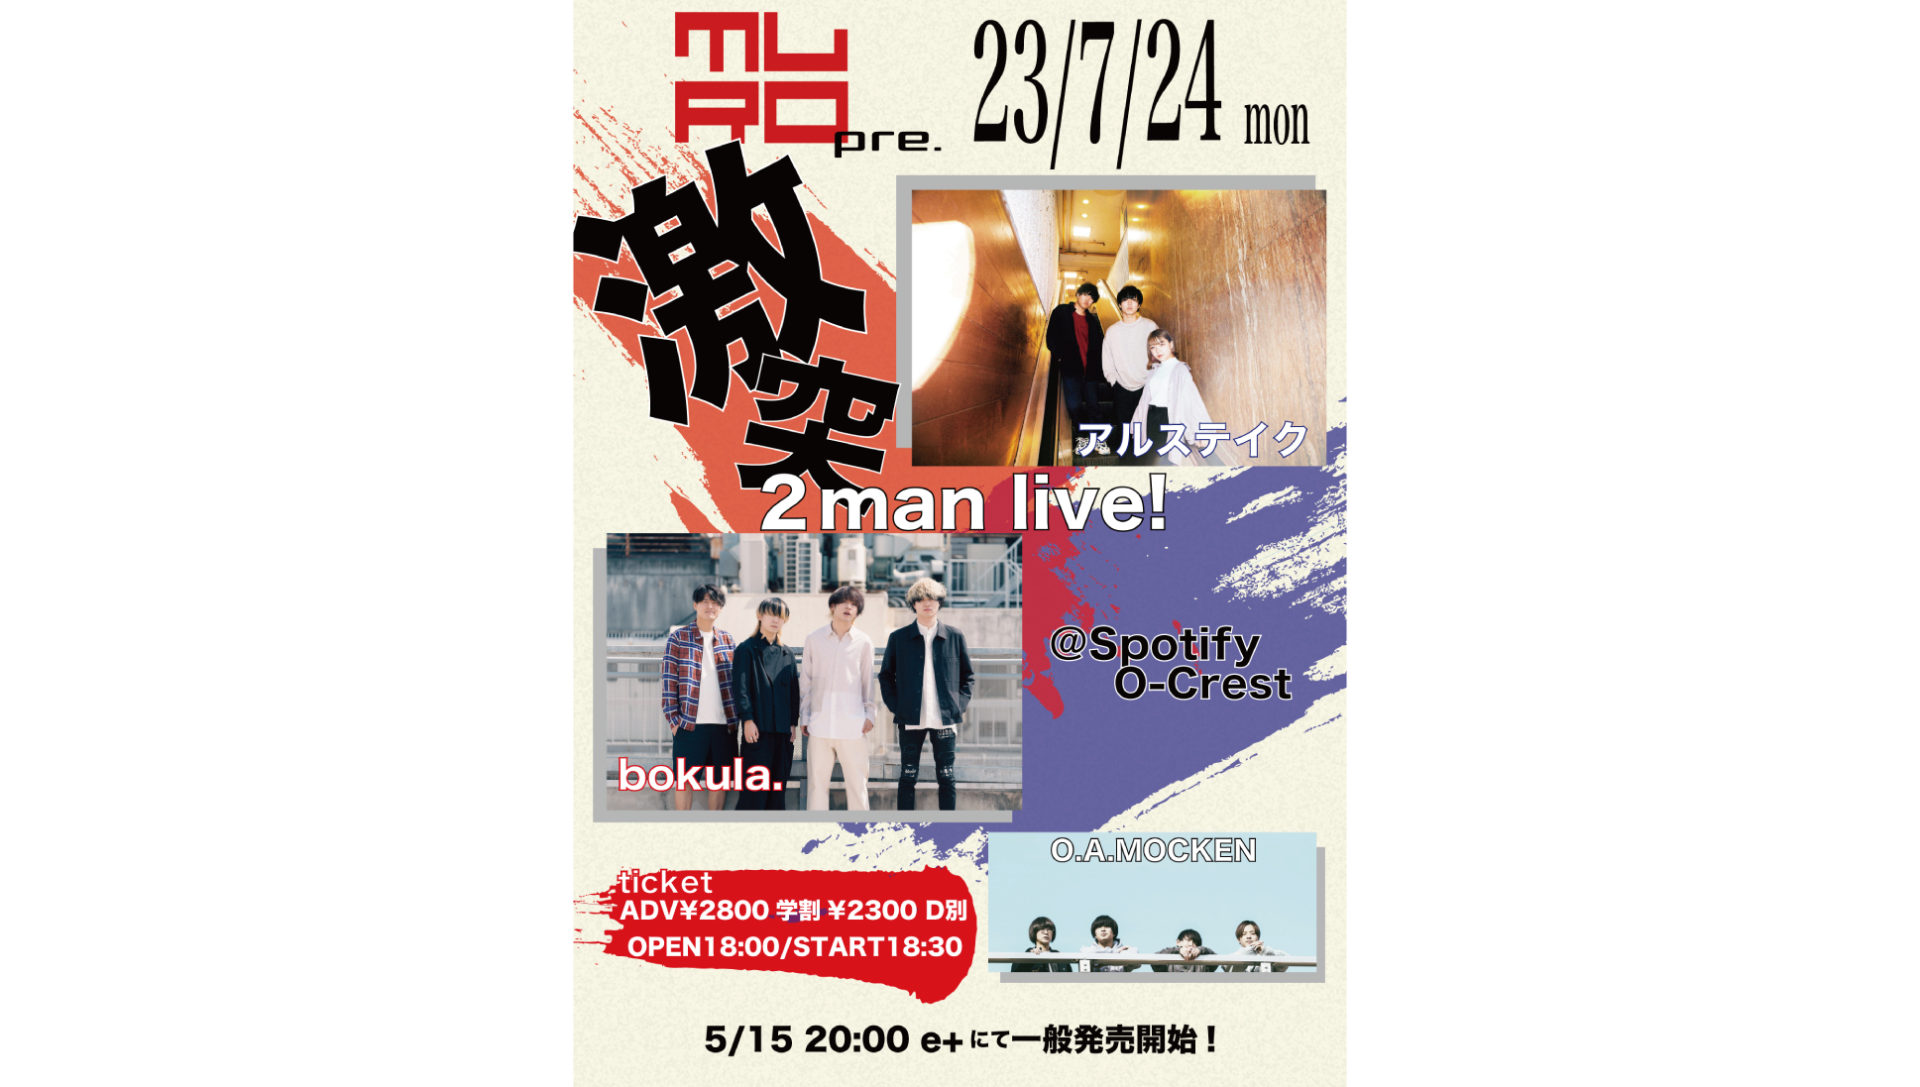 23/7/24 O-Crest MURO presents 激突 2man live!アルステイク / bokula./MOCKEN